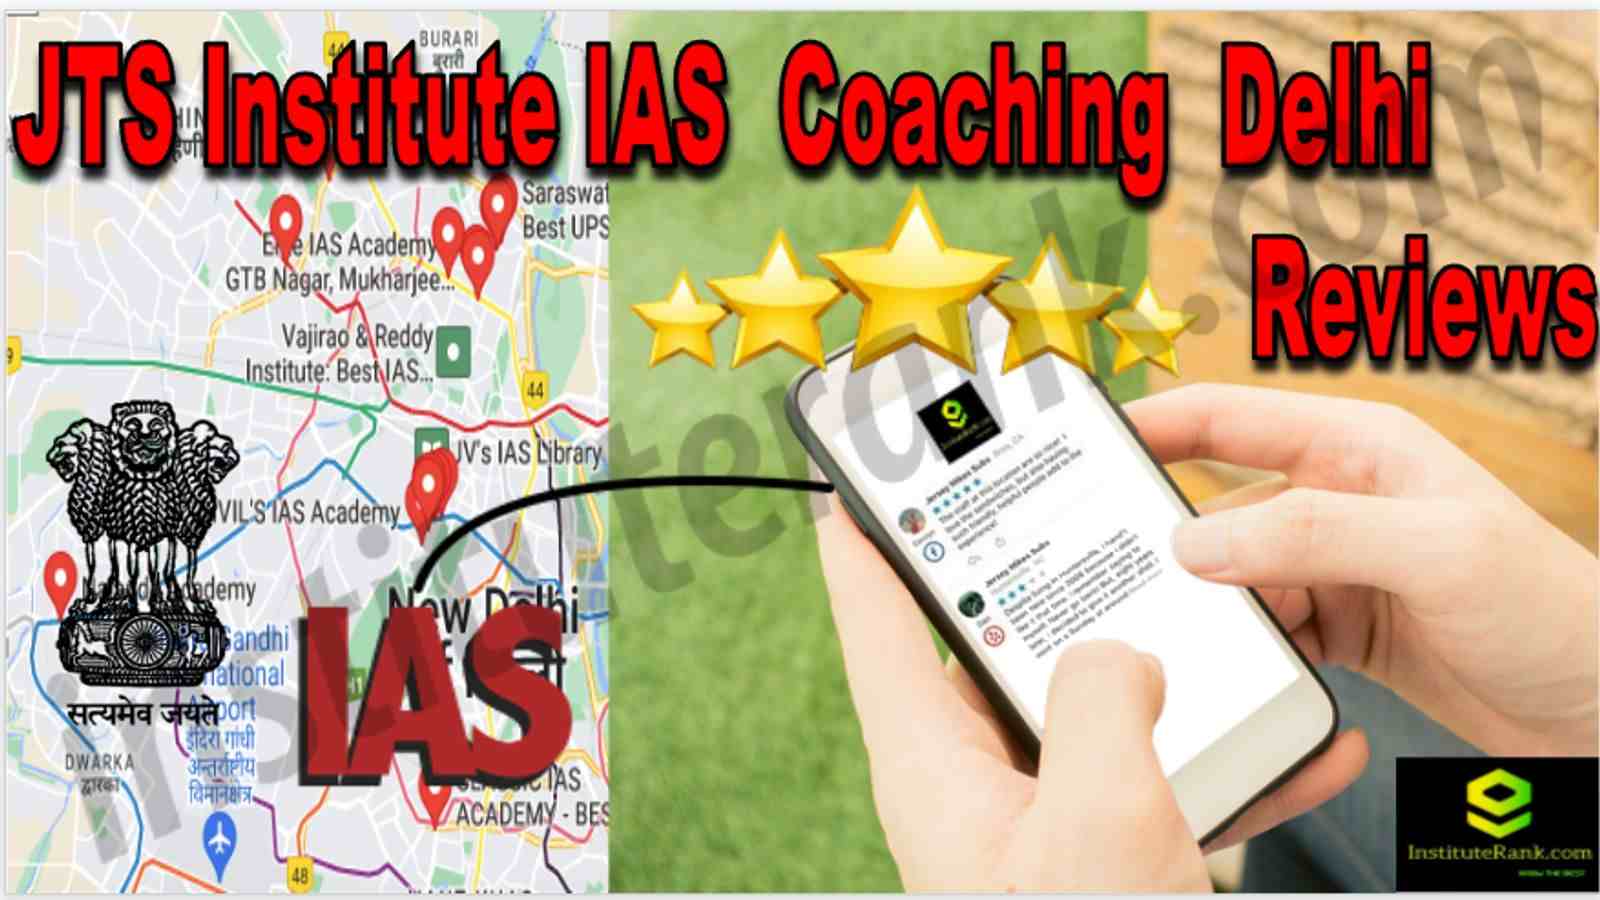 JTS Institute IAS Coaching Delhi Reviews